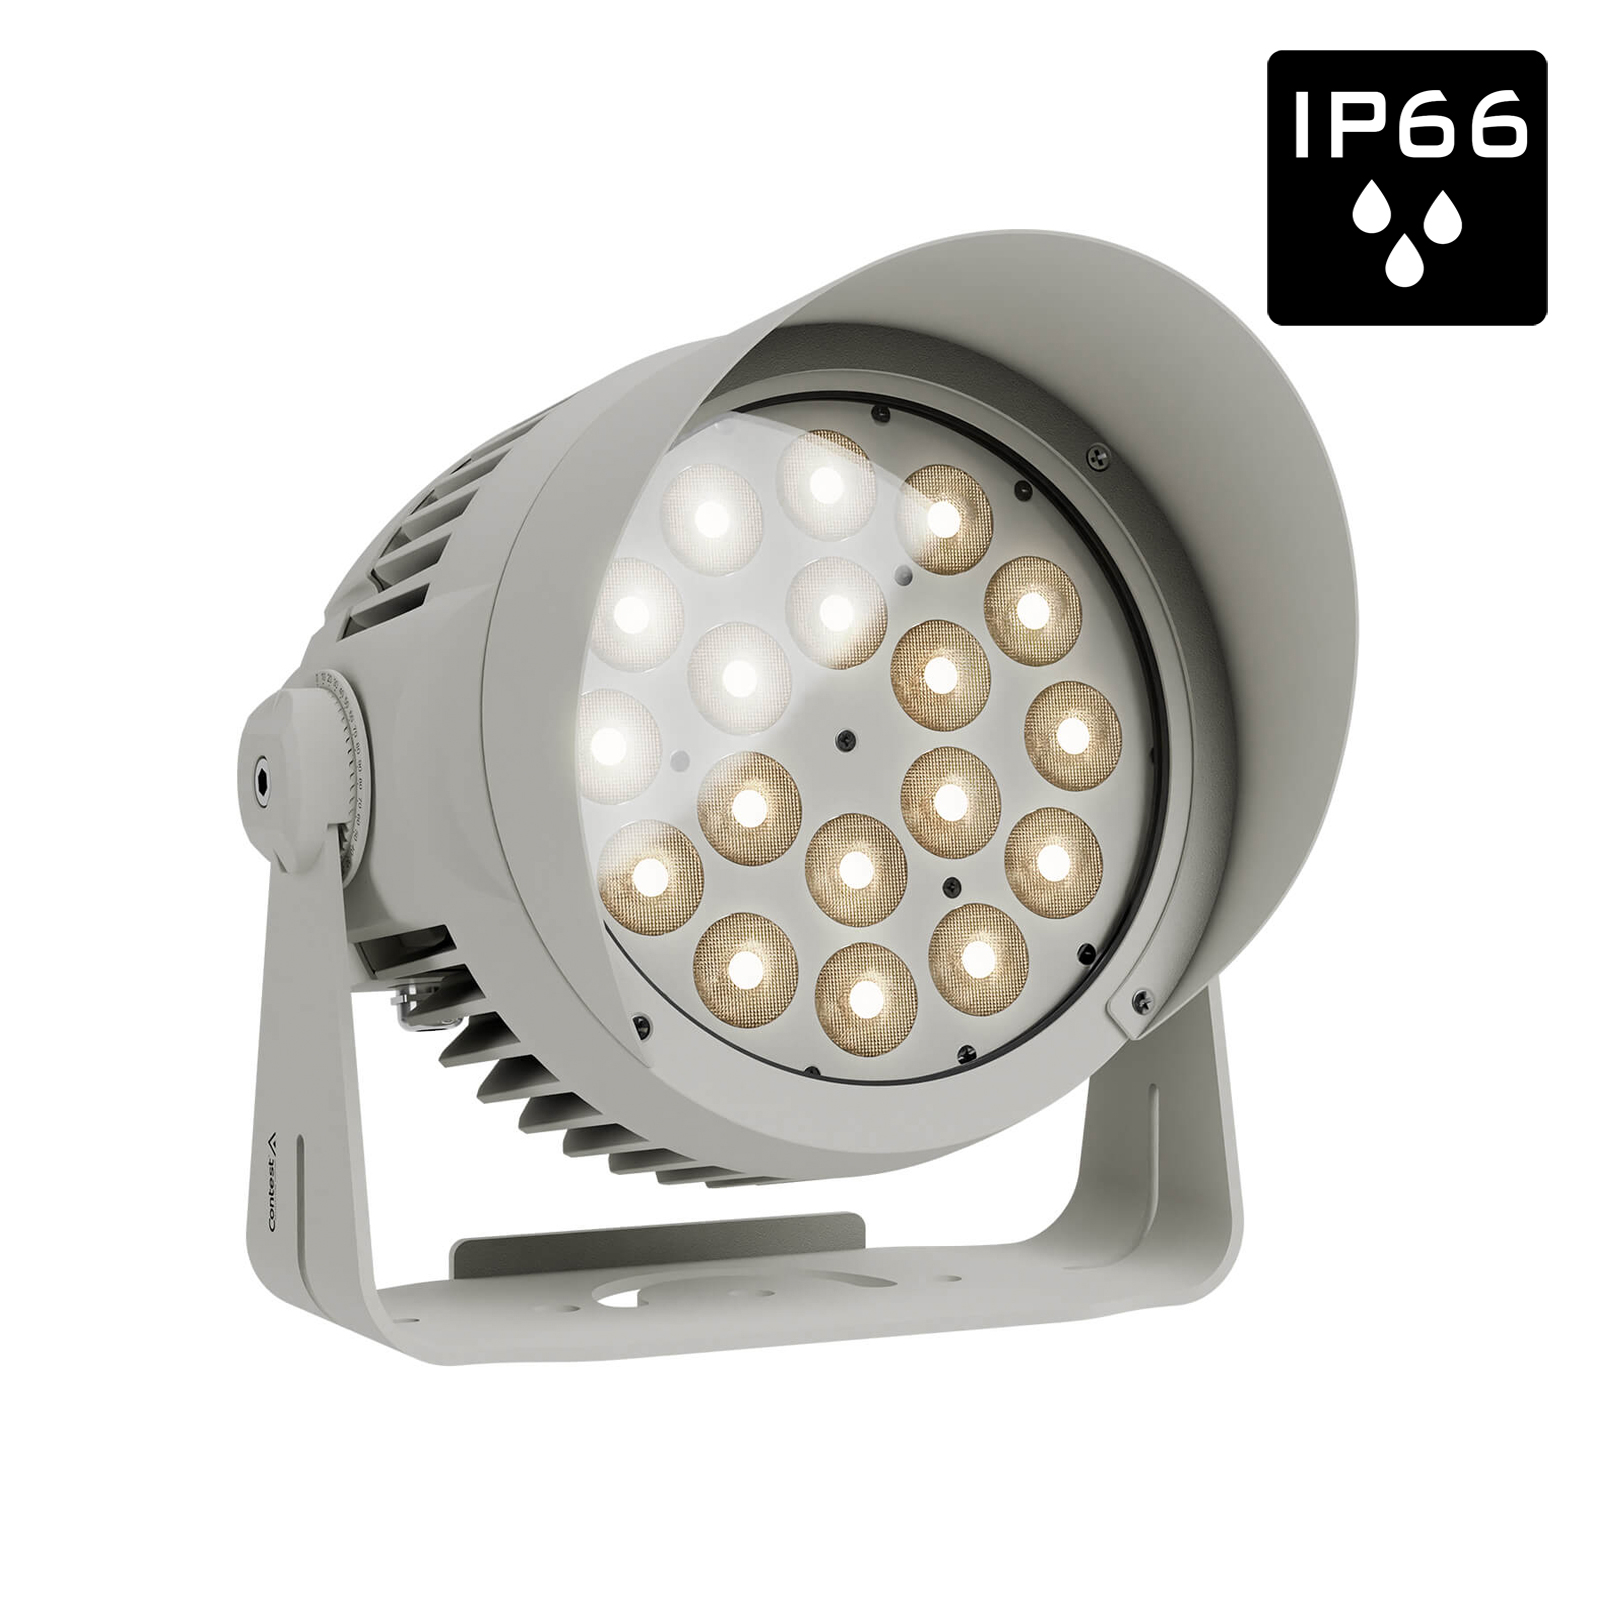 Architectural spotlight IP66 18x LEDs Dynamic White 27006000K 150W 25-